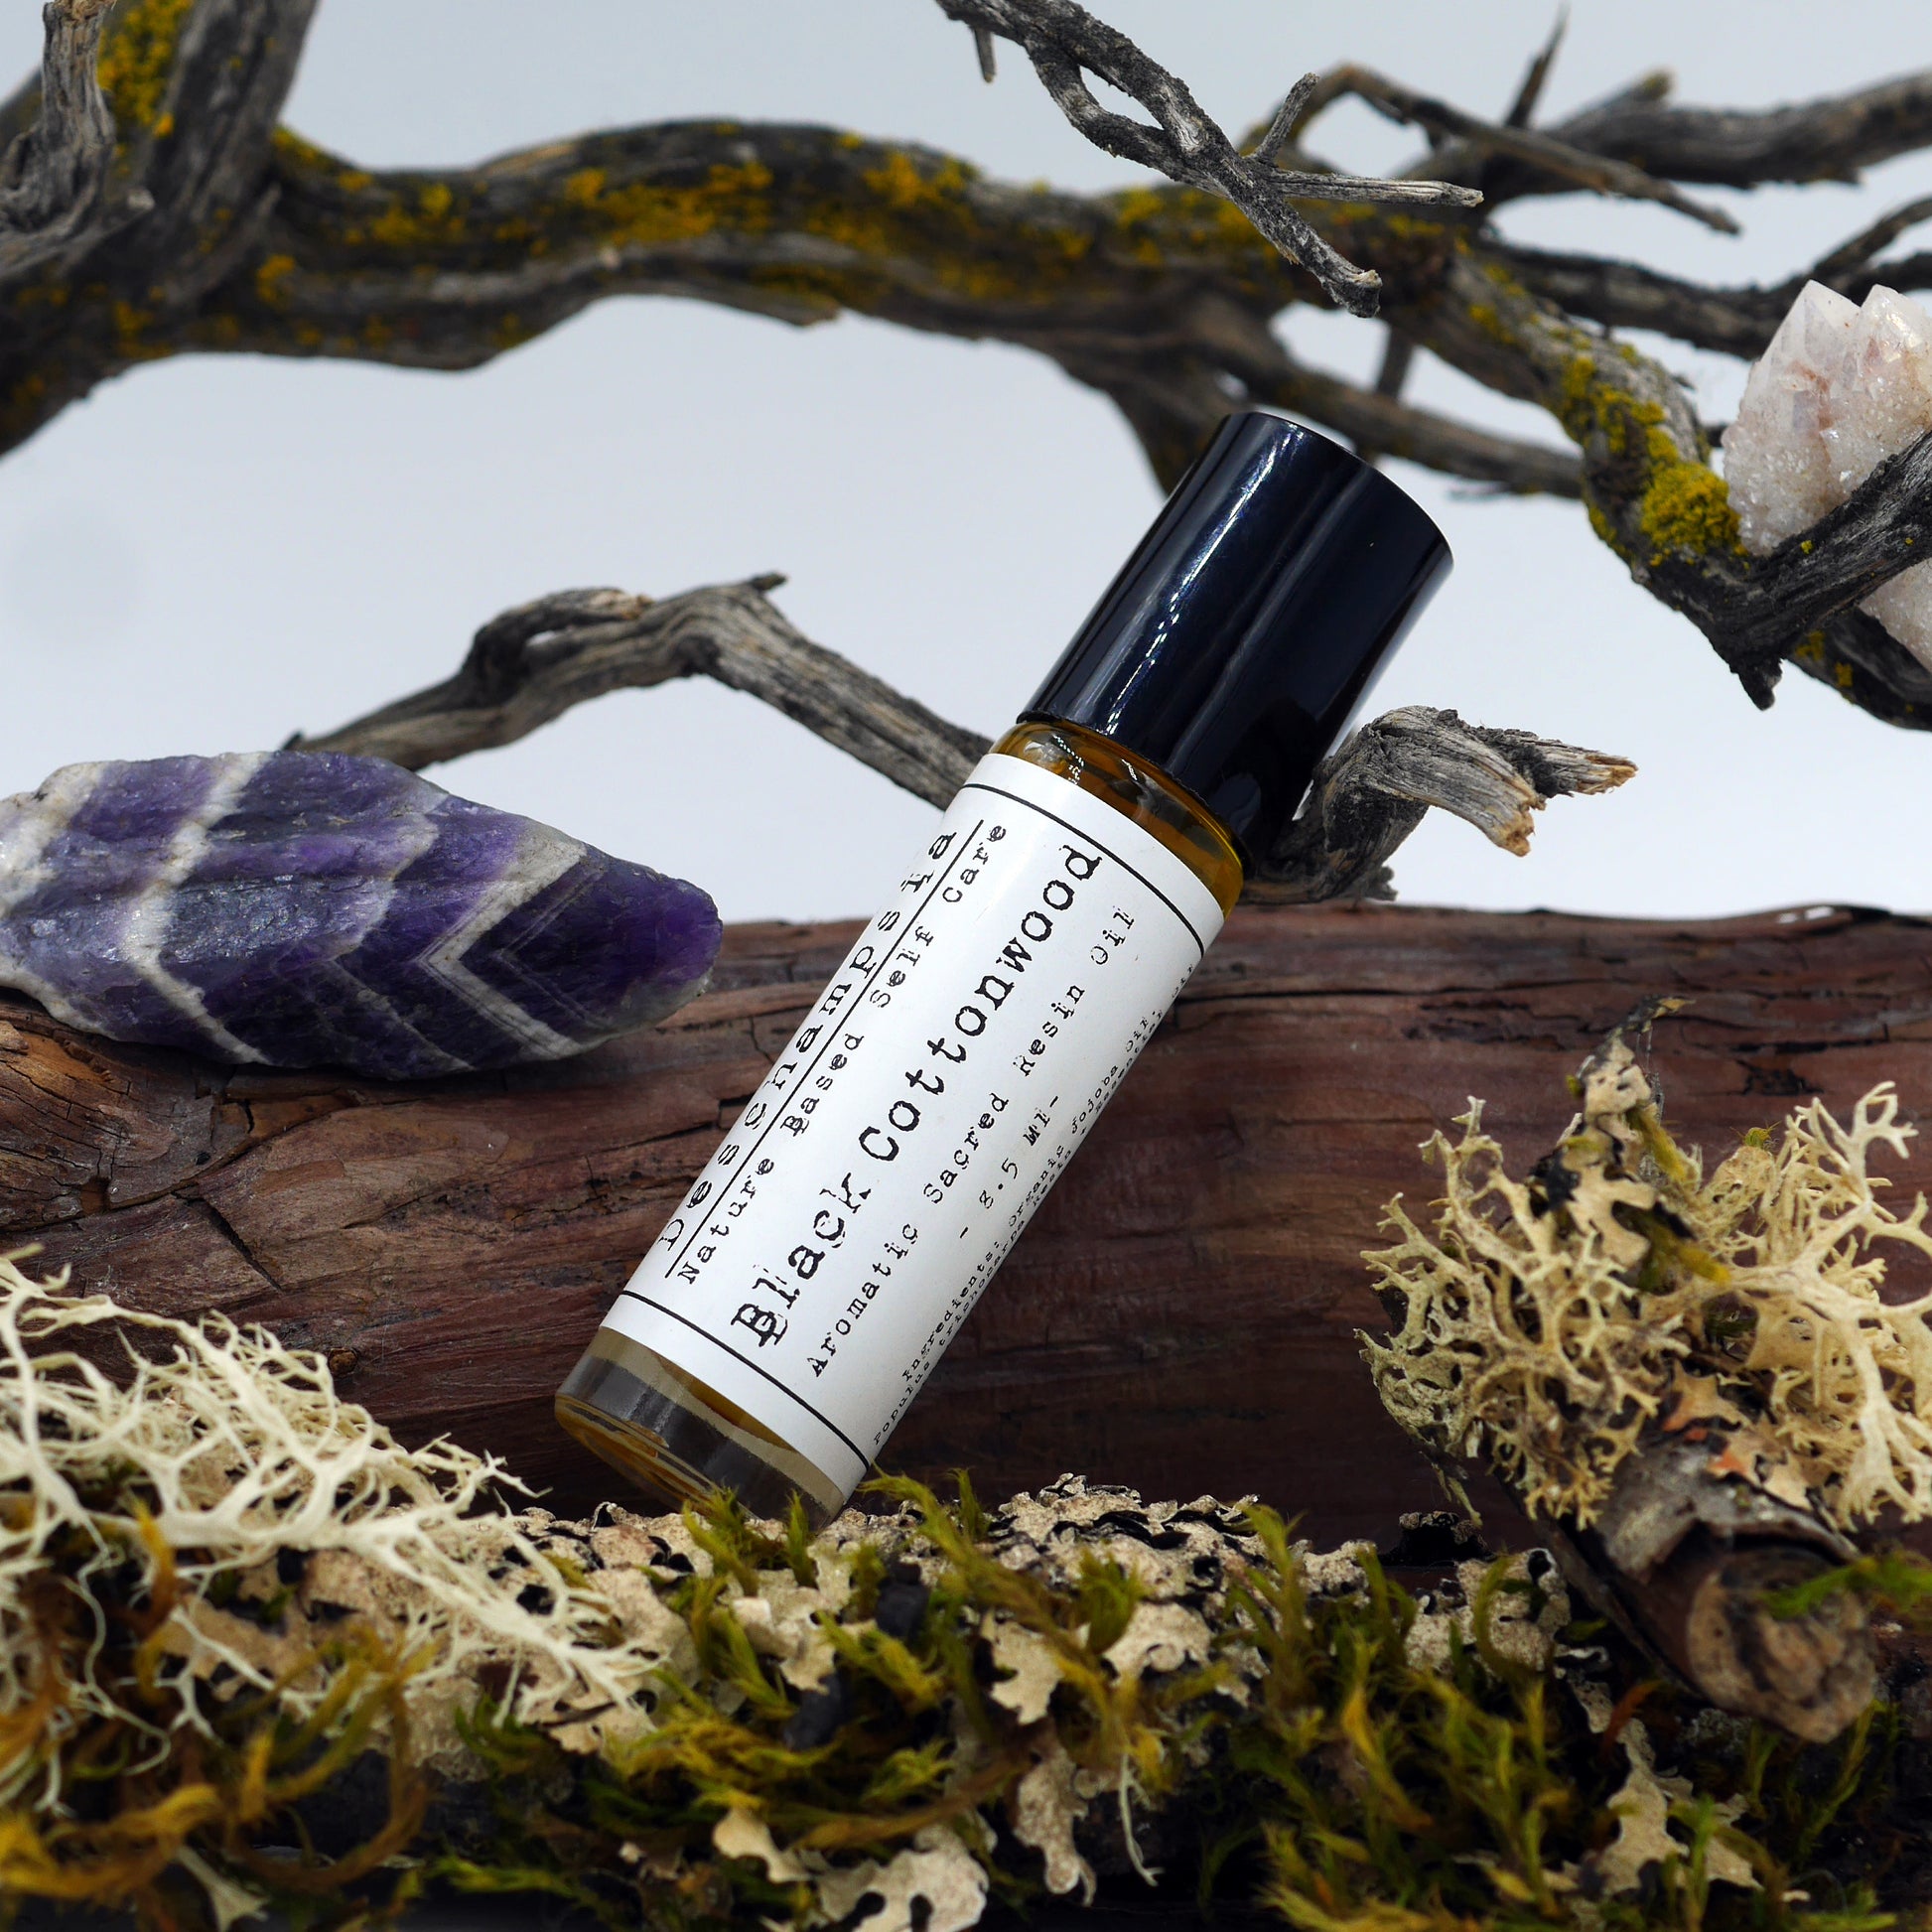 Black Cottonwood sacred aromatic tree resin oils roll on perfume deschampsia